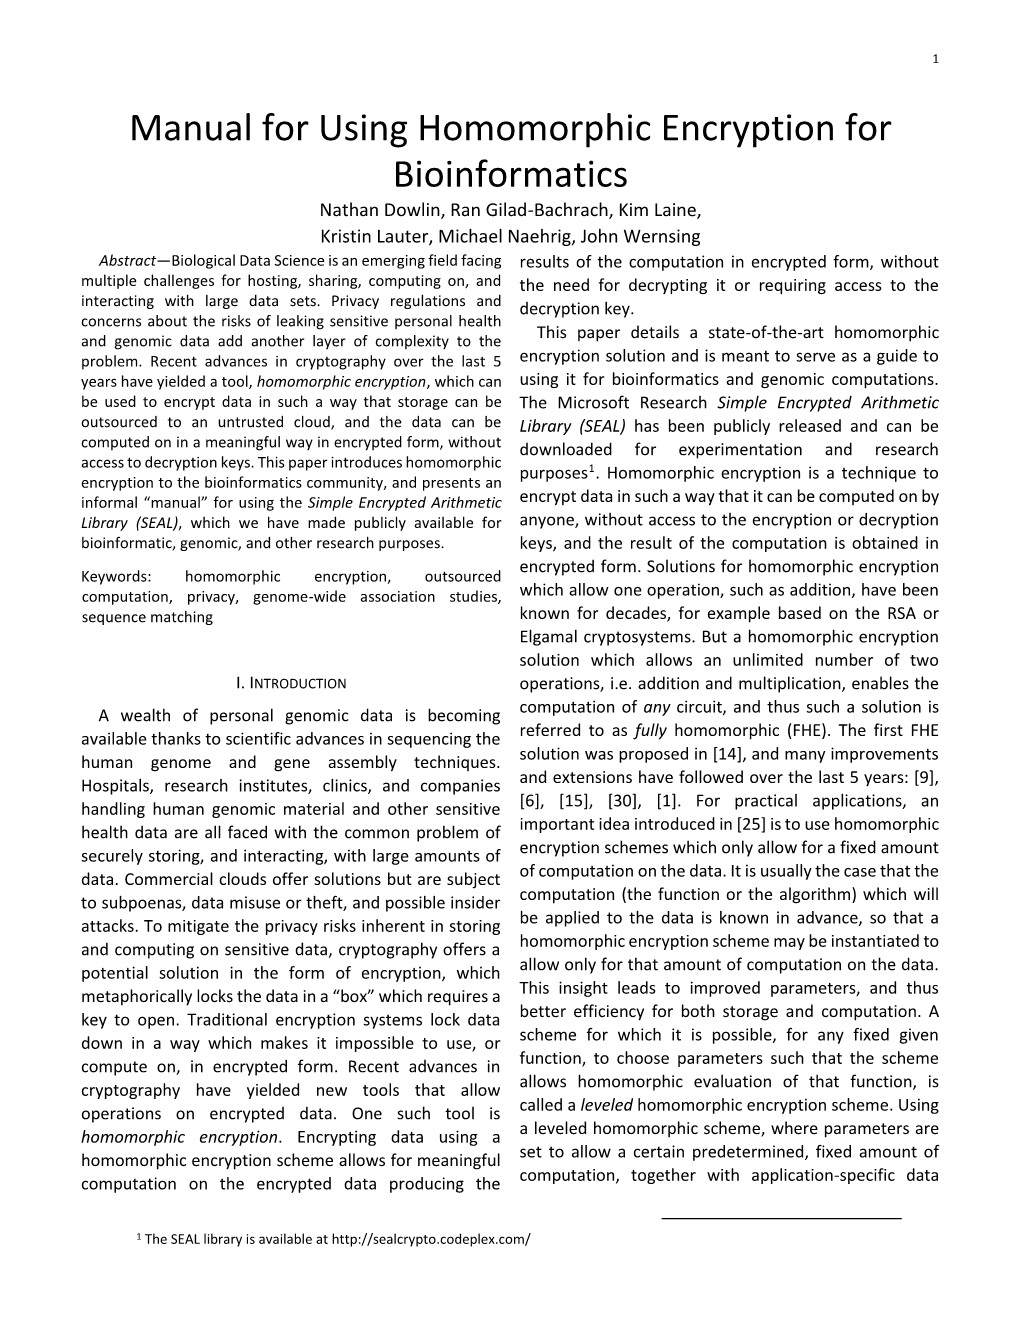 Manual for Using Homomorphic Encryption for Bioinformatics